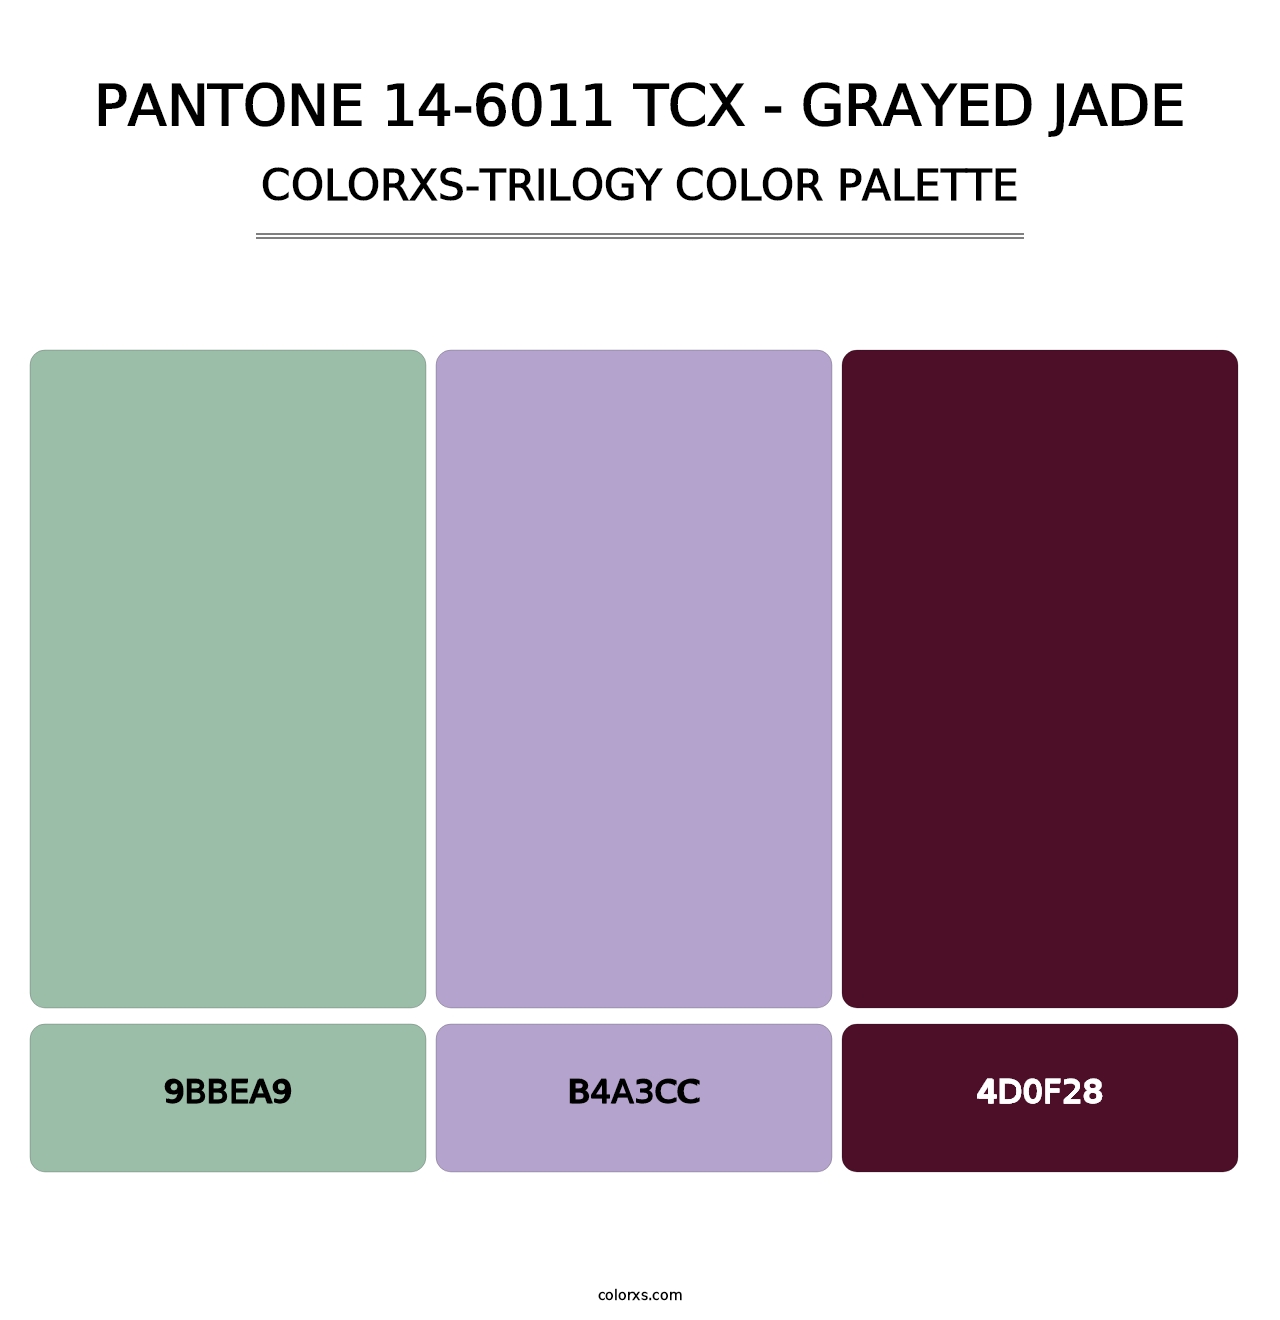 PANTONE 14-6011 TCX - Grayed Jade - Colorxs Trilogy Palette